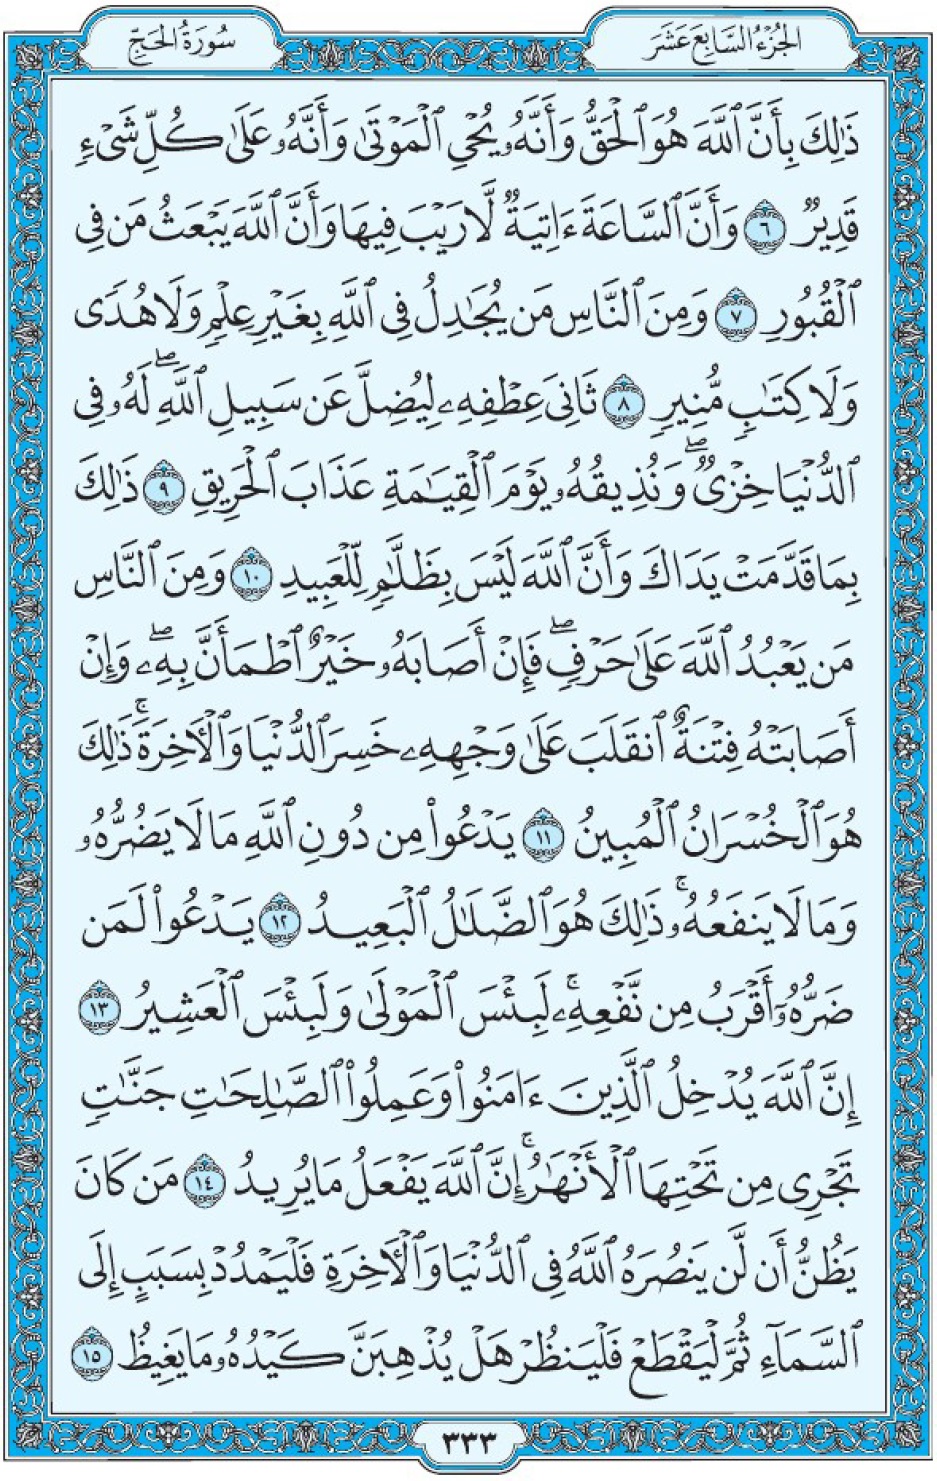 Коран Мединский мусхаф страница 333, Аль-Хадж, аят 6-15